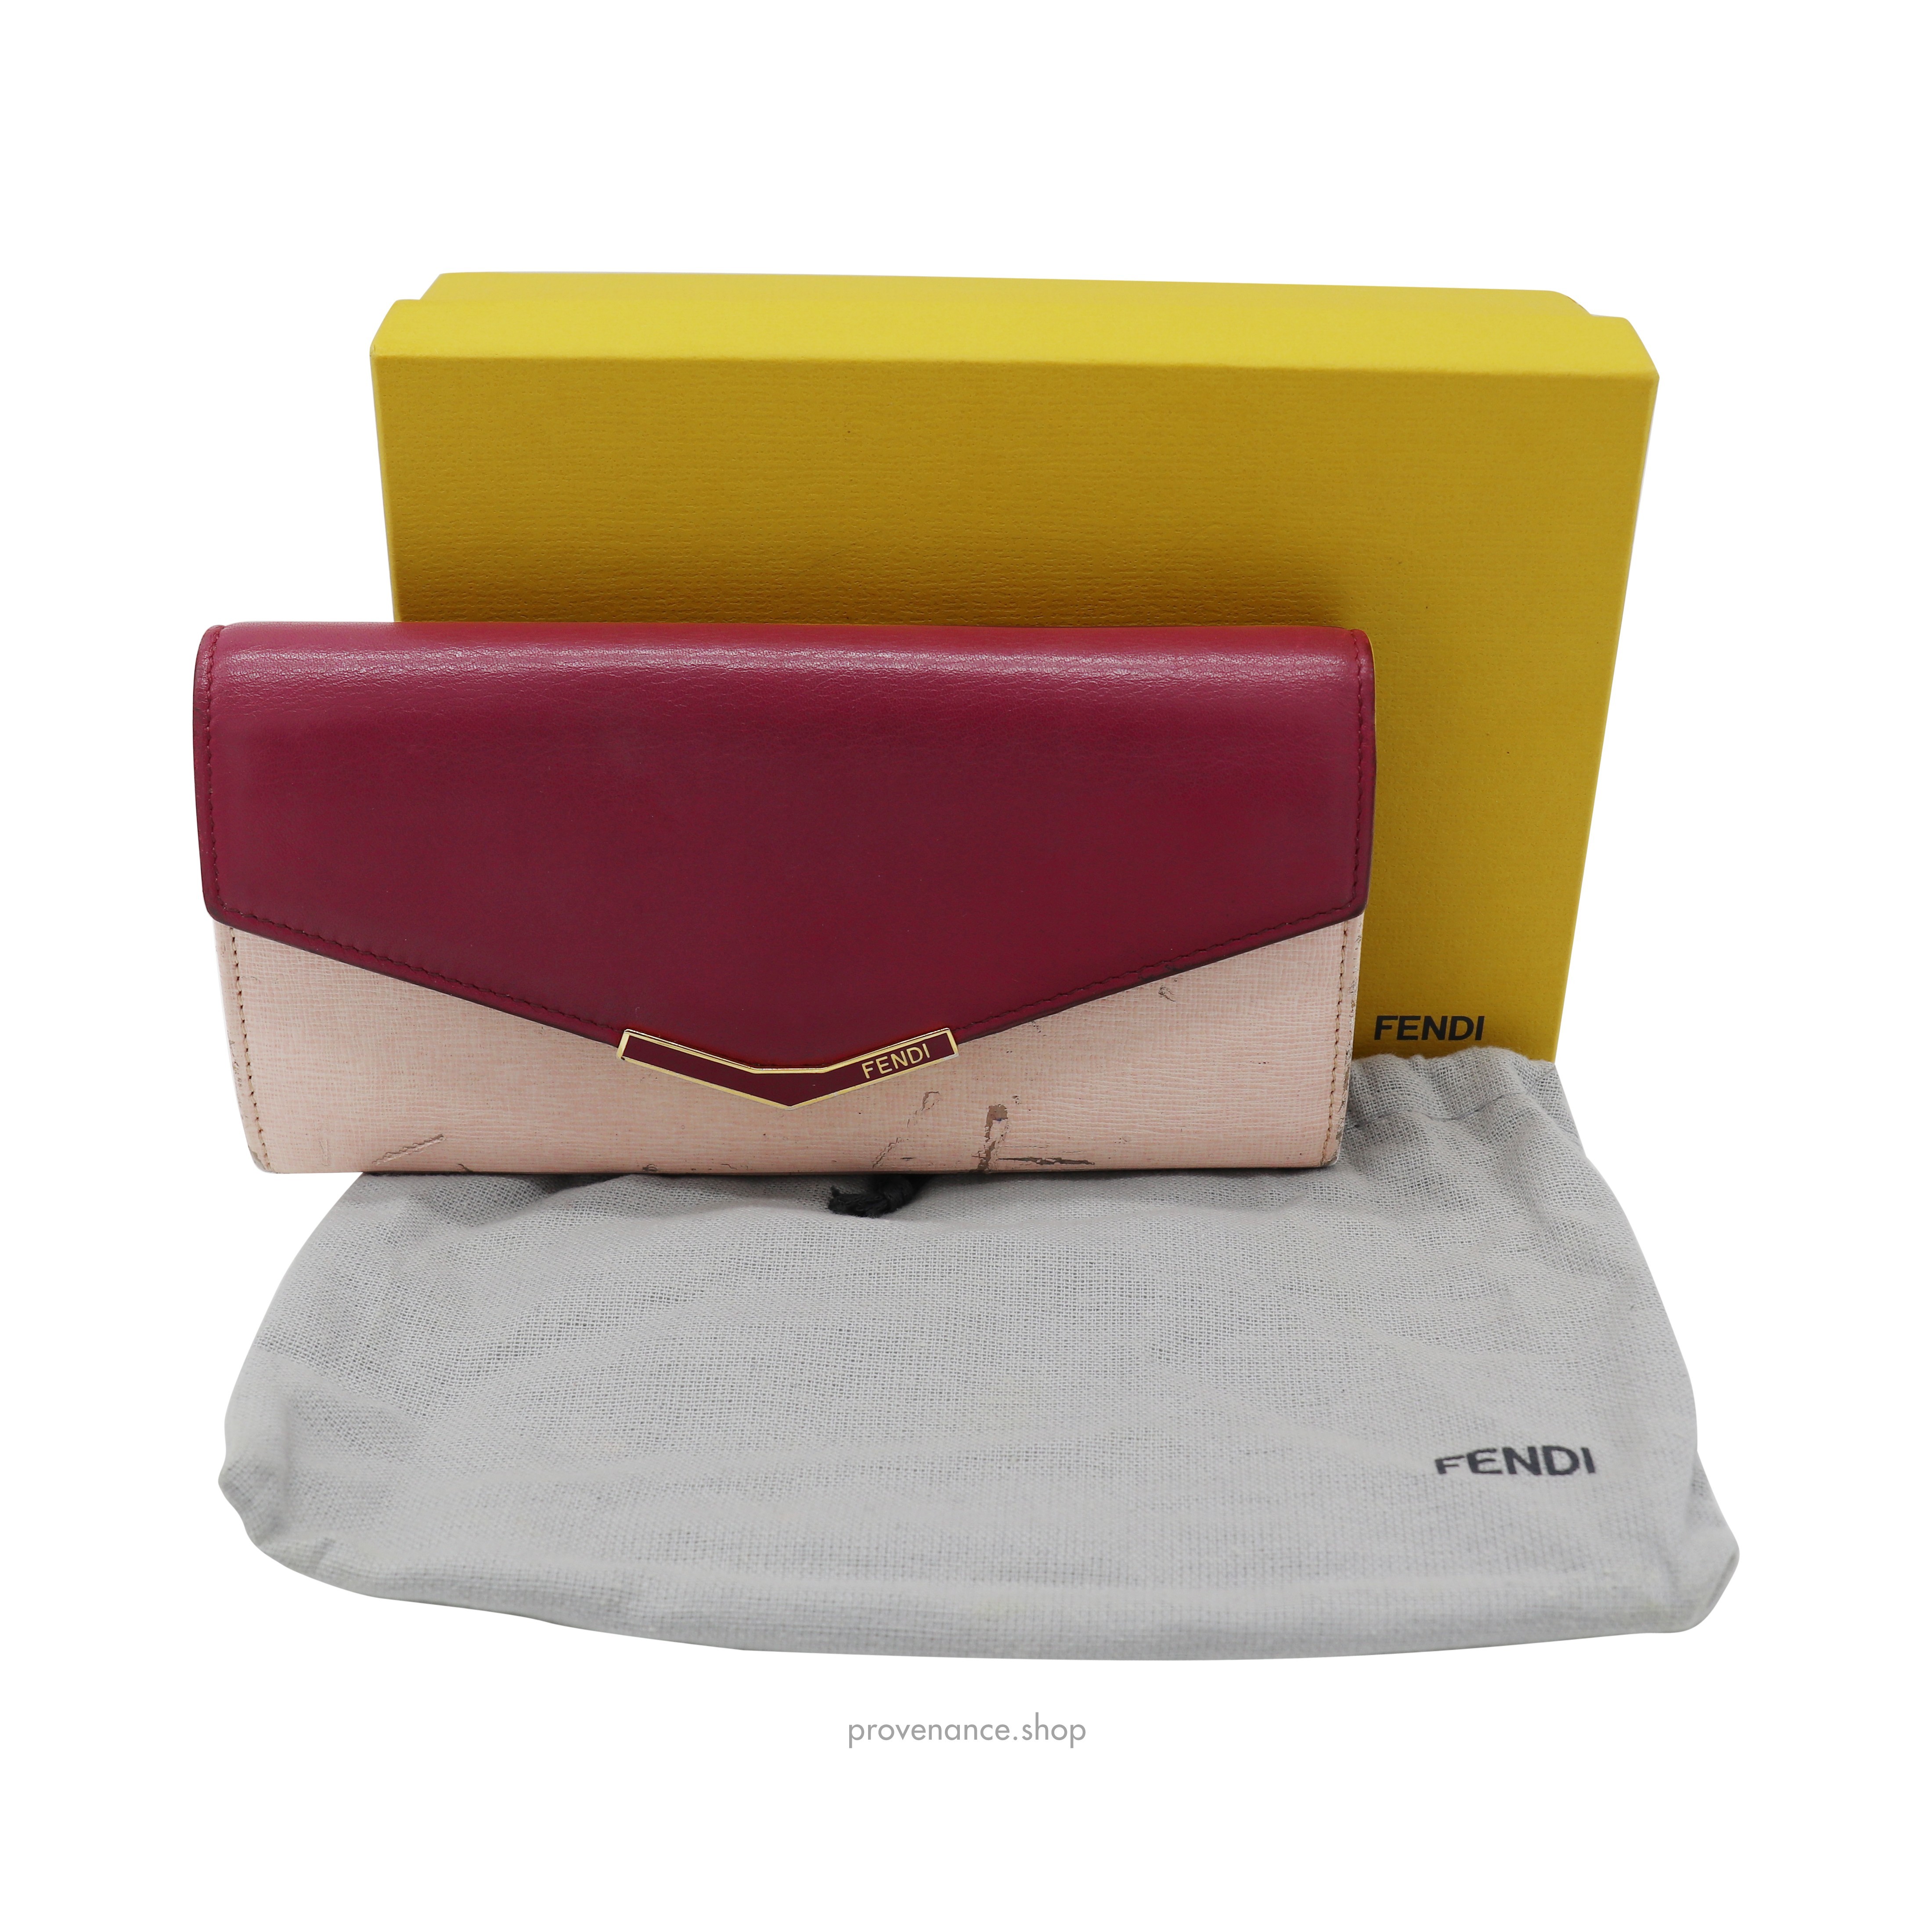 Fendi Long Wallet - Fuchsia Pink Leather - 1